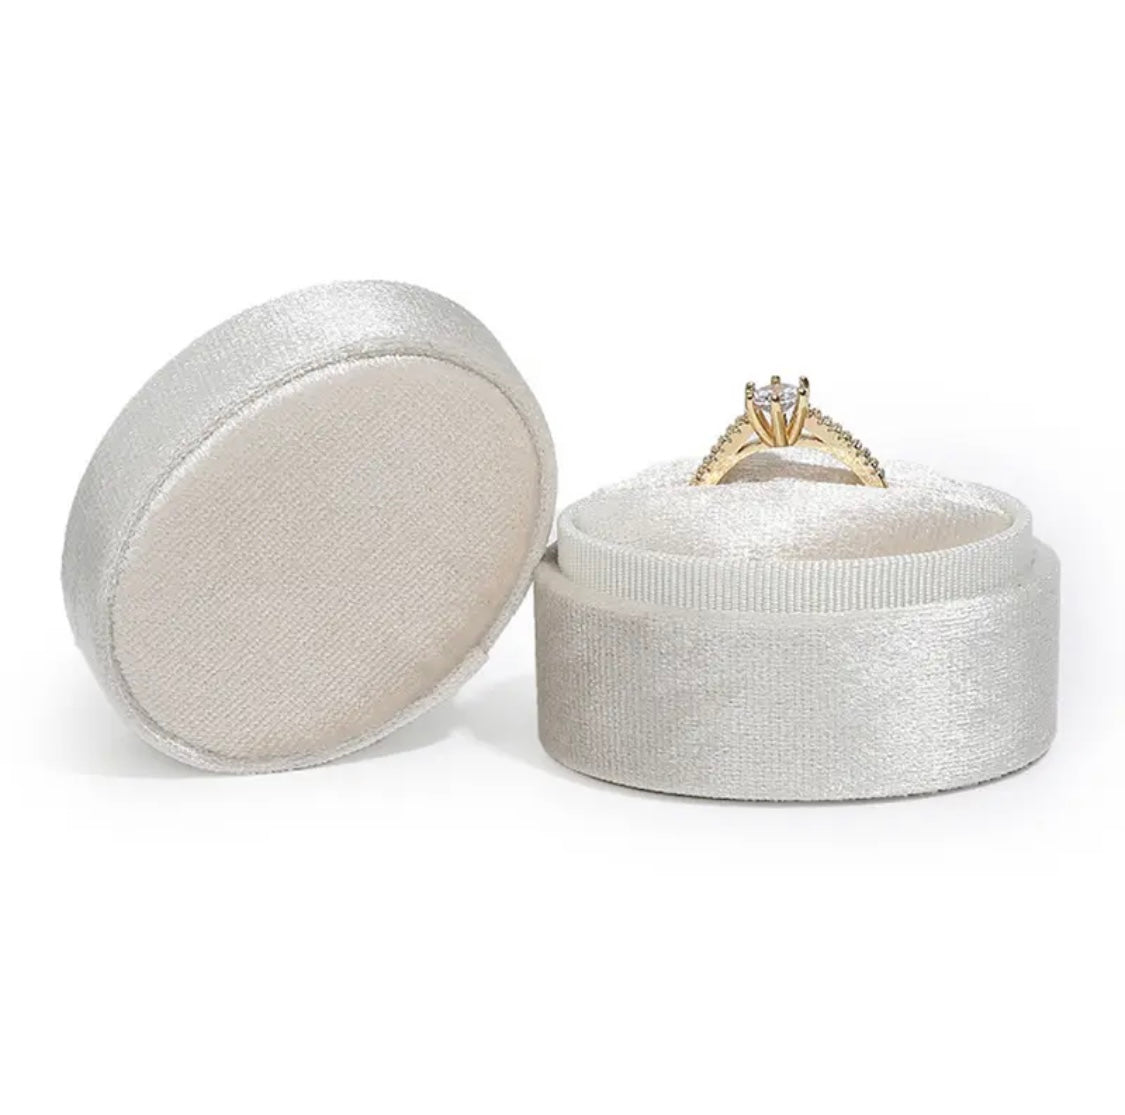 Ringask Pearl white, oval sammet (vit ringbox)